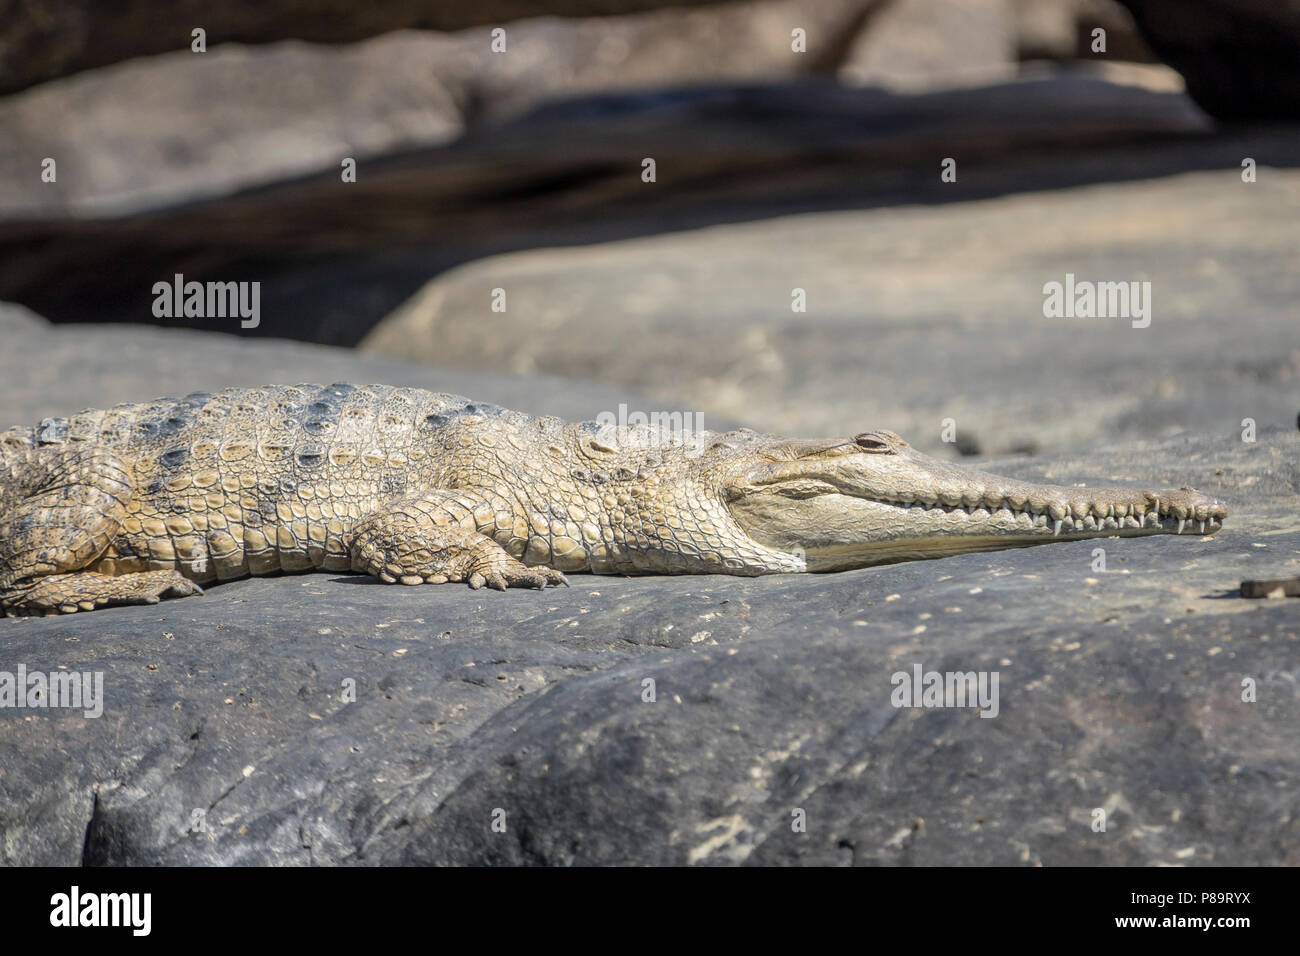 2 metre freshwater crocodile at boat mooring area in Nitmiluk Gorge, Northern Territory, Australia Stock Photo